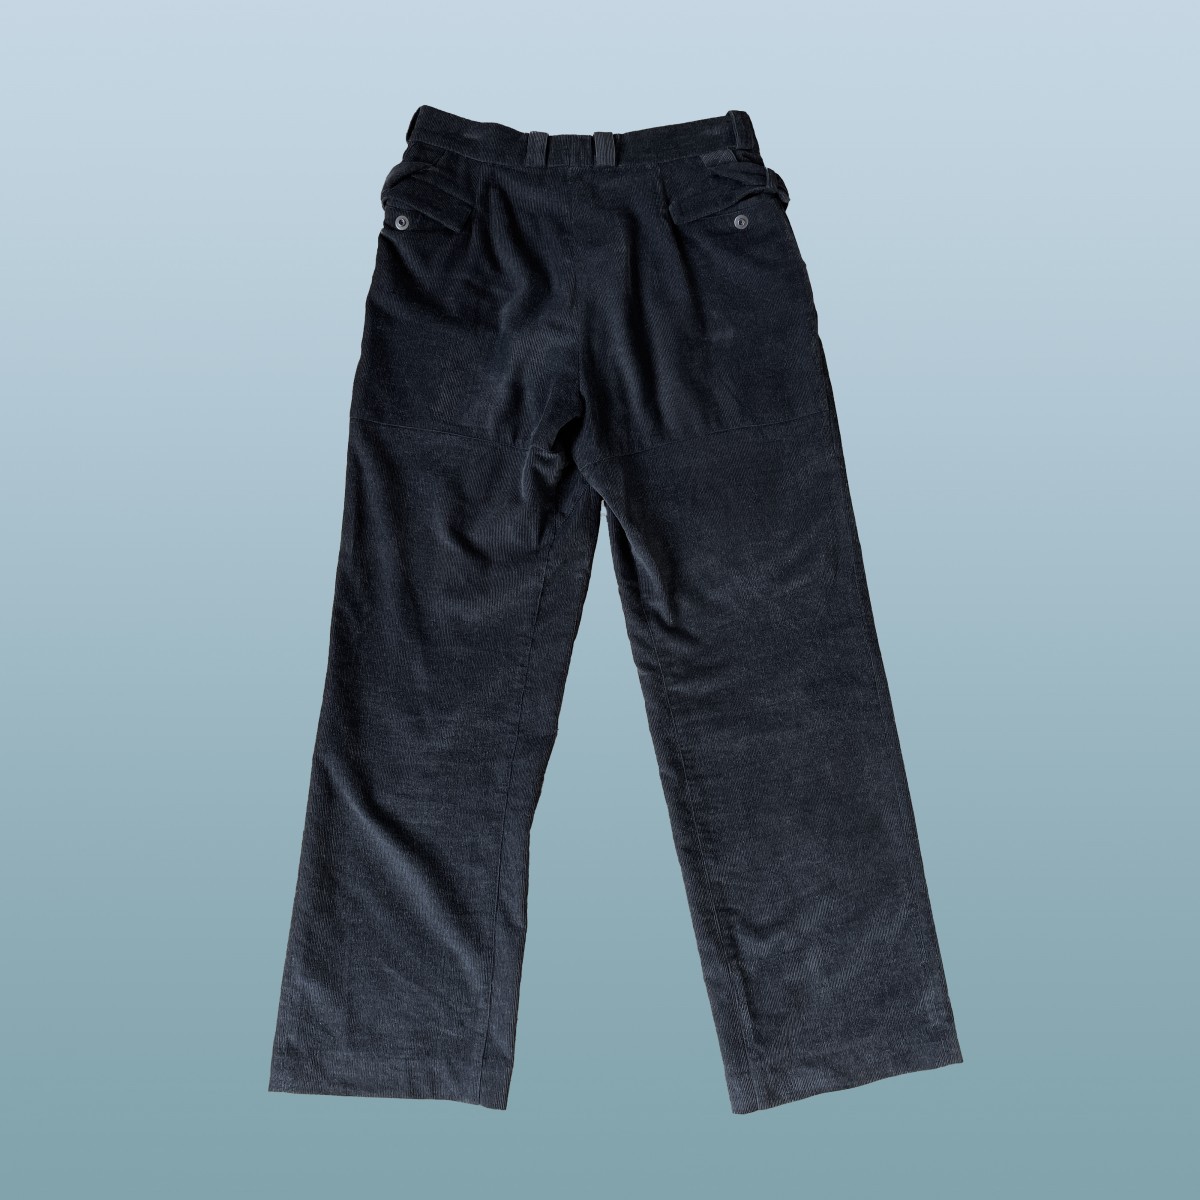 Yann Treated Corduroy pants (FW18) - 3